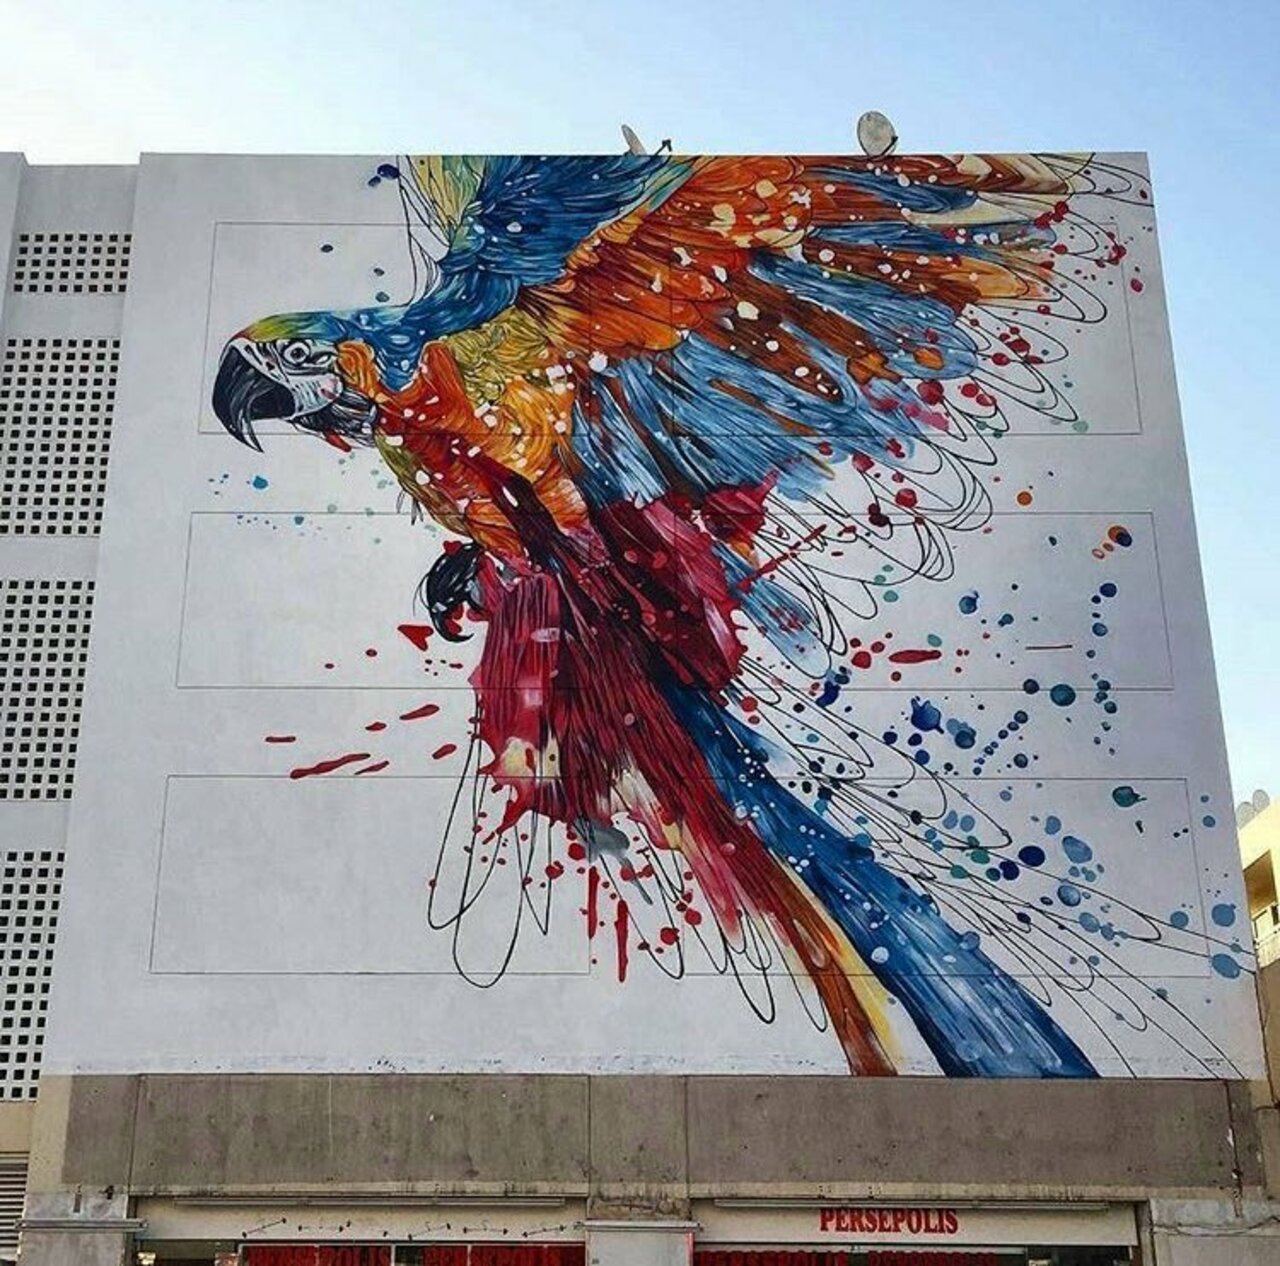 RT GoogleStreetArt: New Street Art by Katun & yumzone found in Dubai #art #graffiti #mural #streetart https://t.co/be4Ar7mrZo